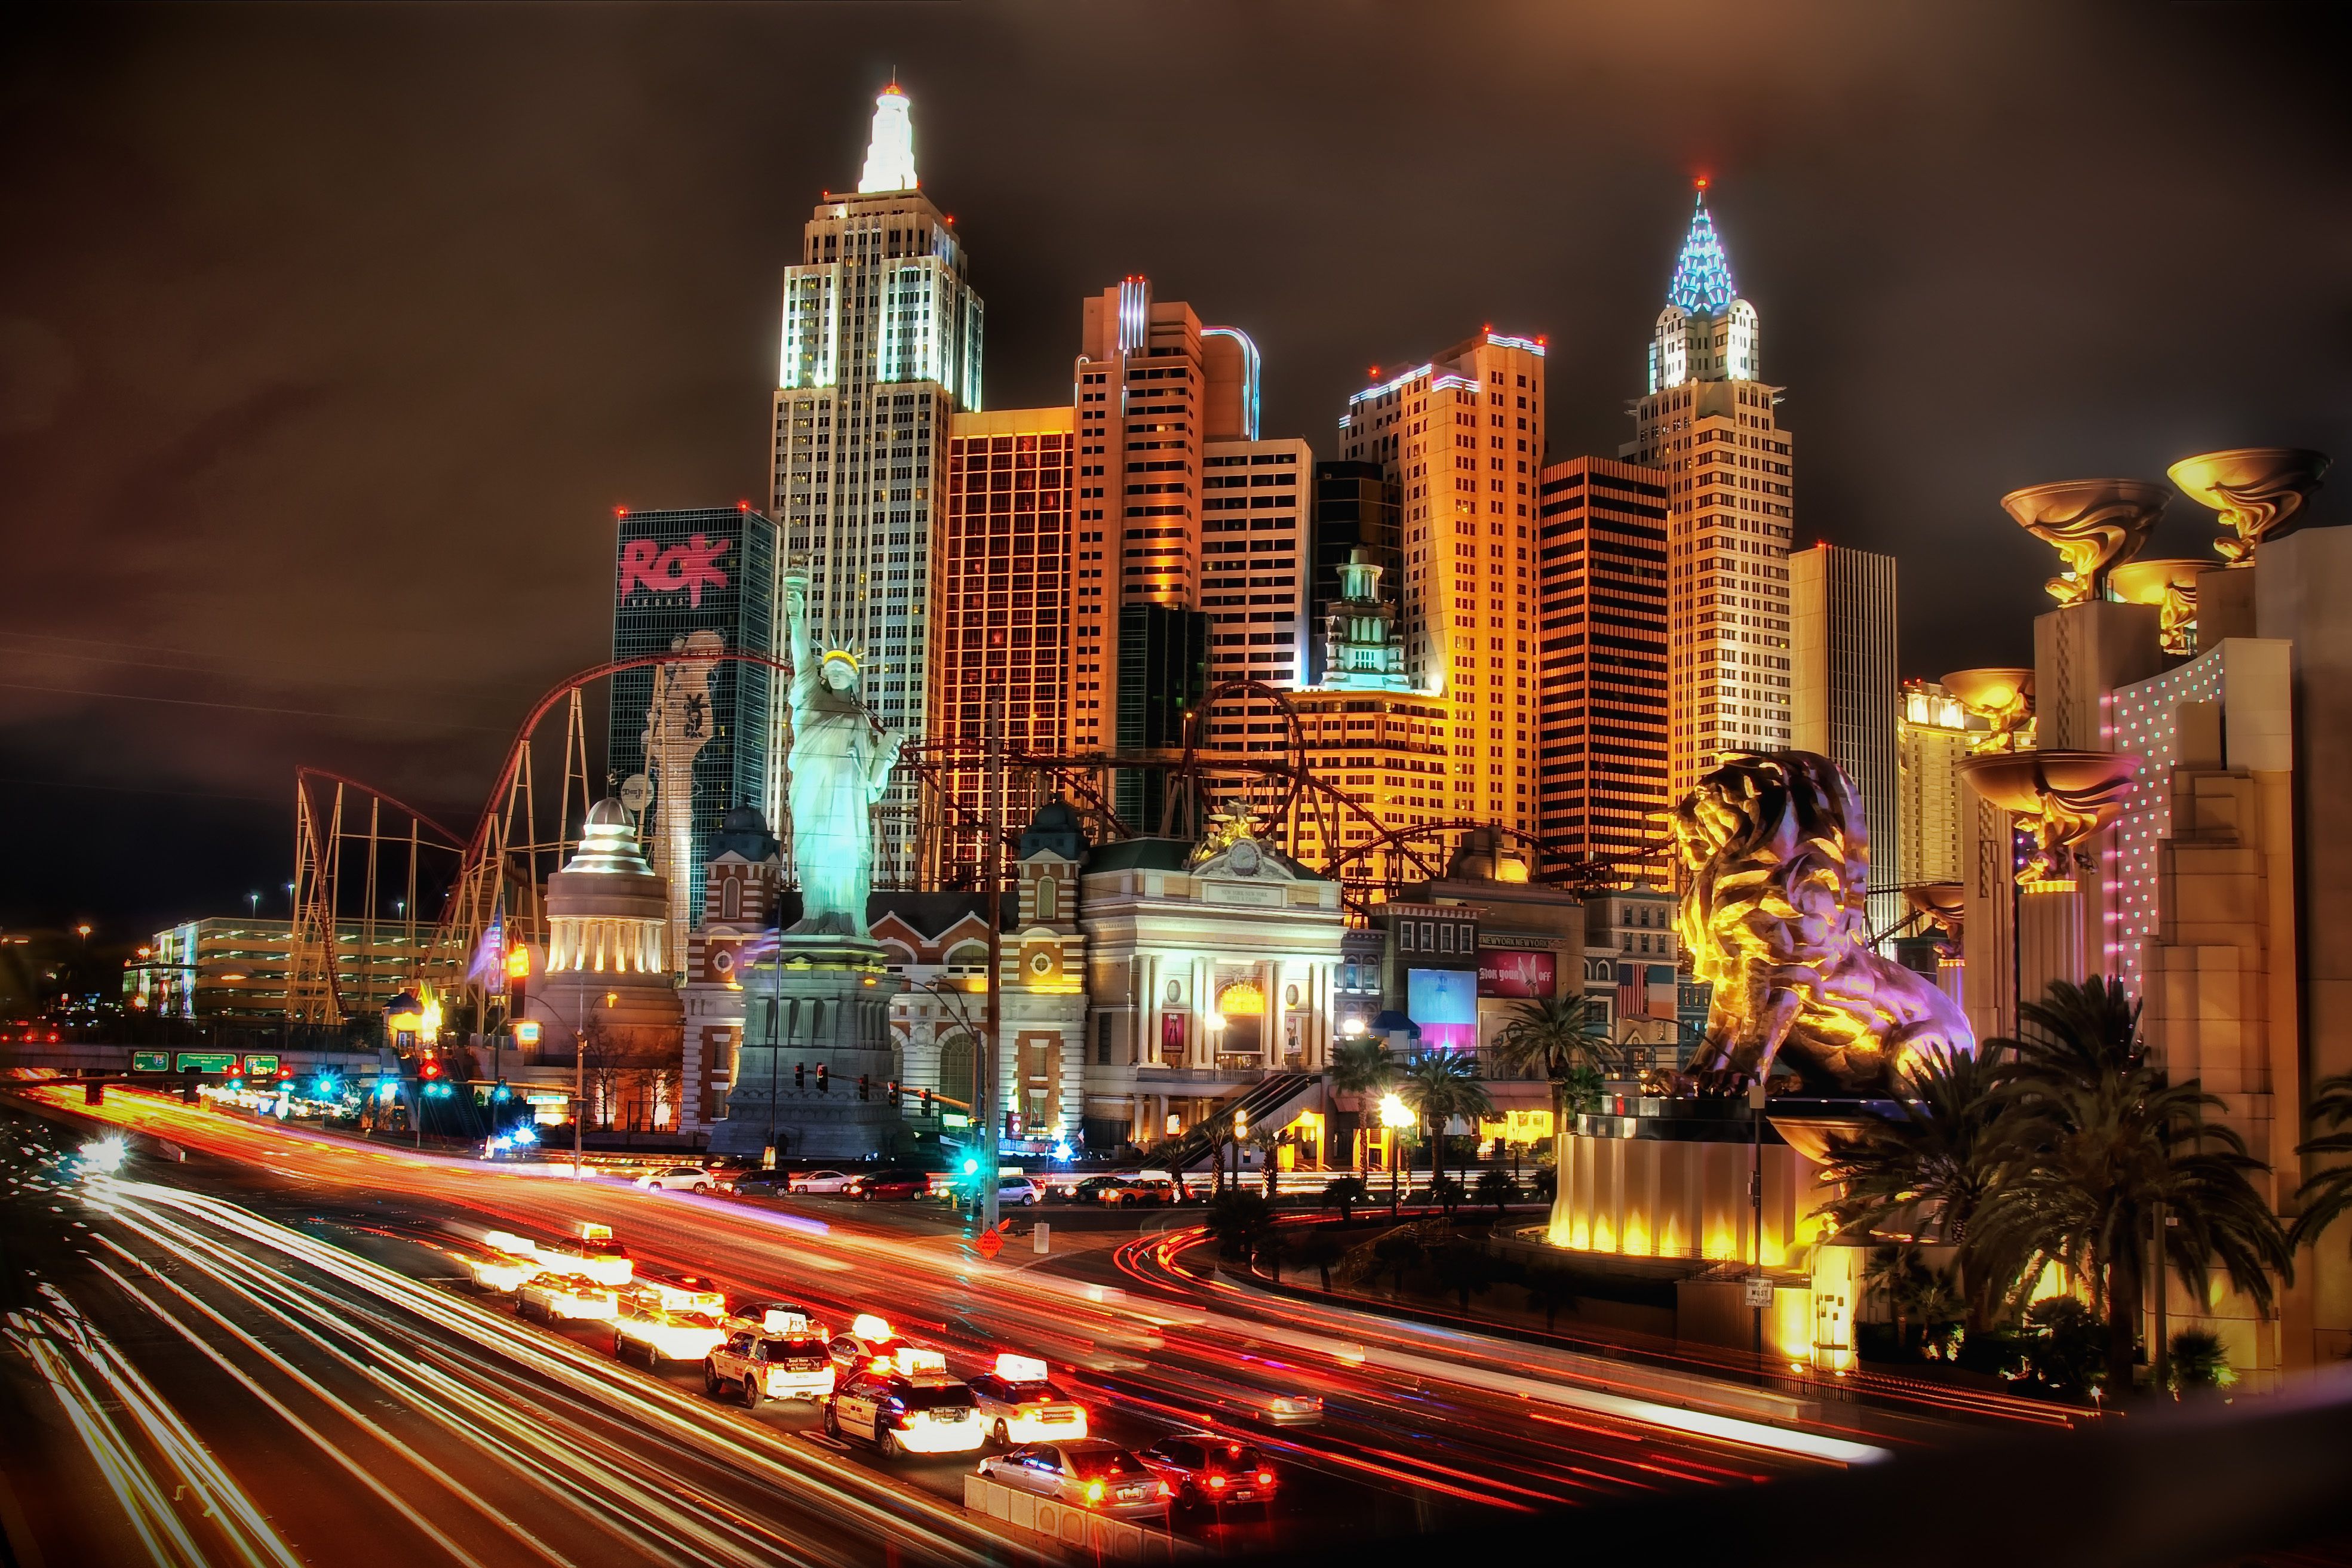 Las Vegas - Nevada 1080P, 2K, 4K, 5K HD wallpapers free download